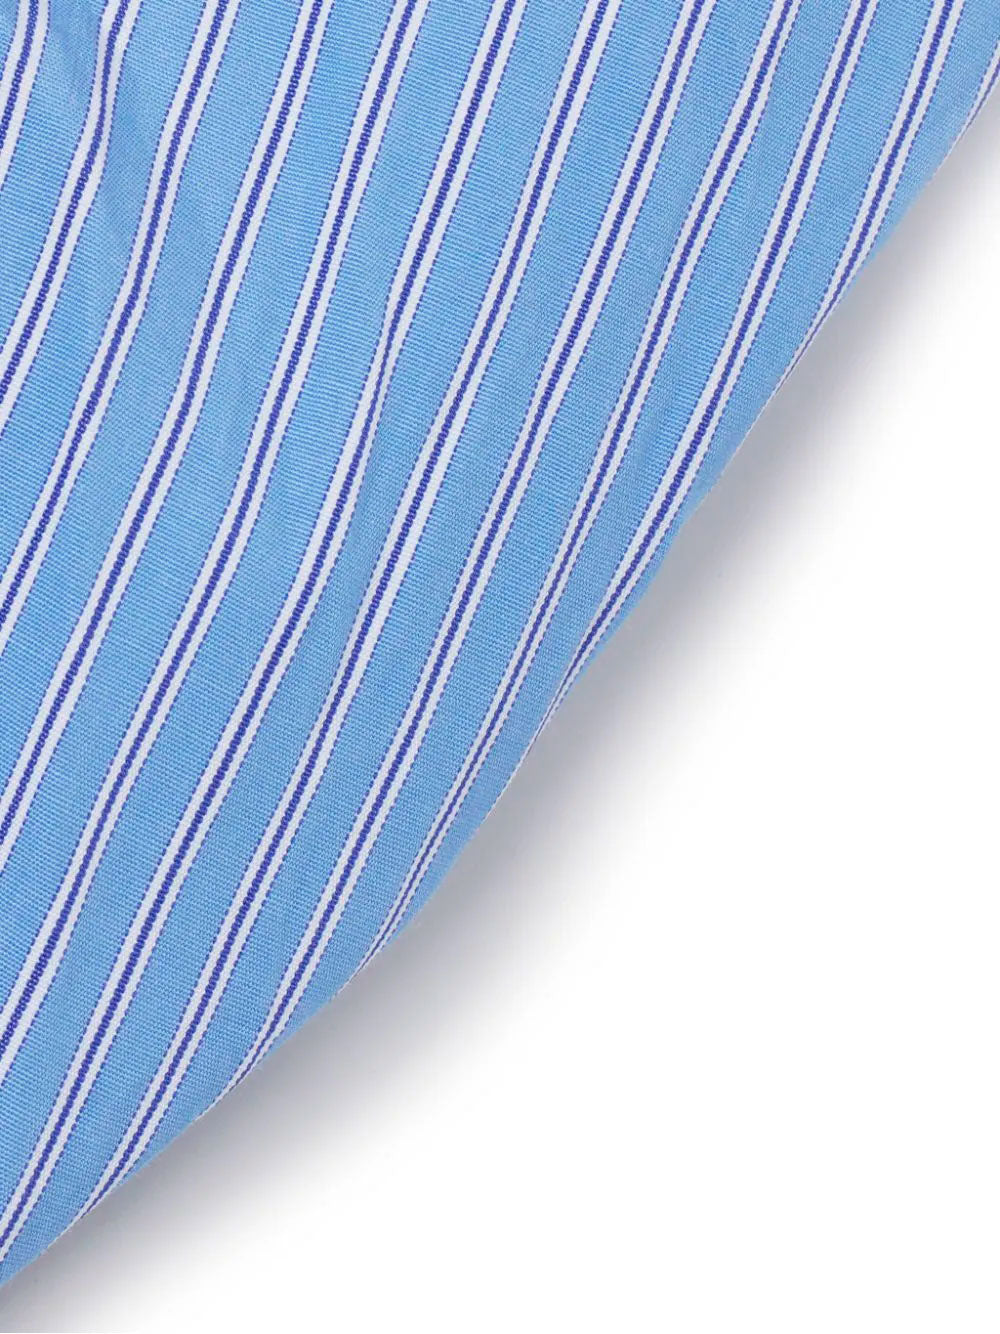 Striped tote bag